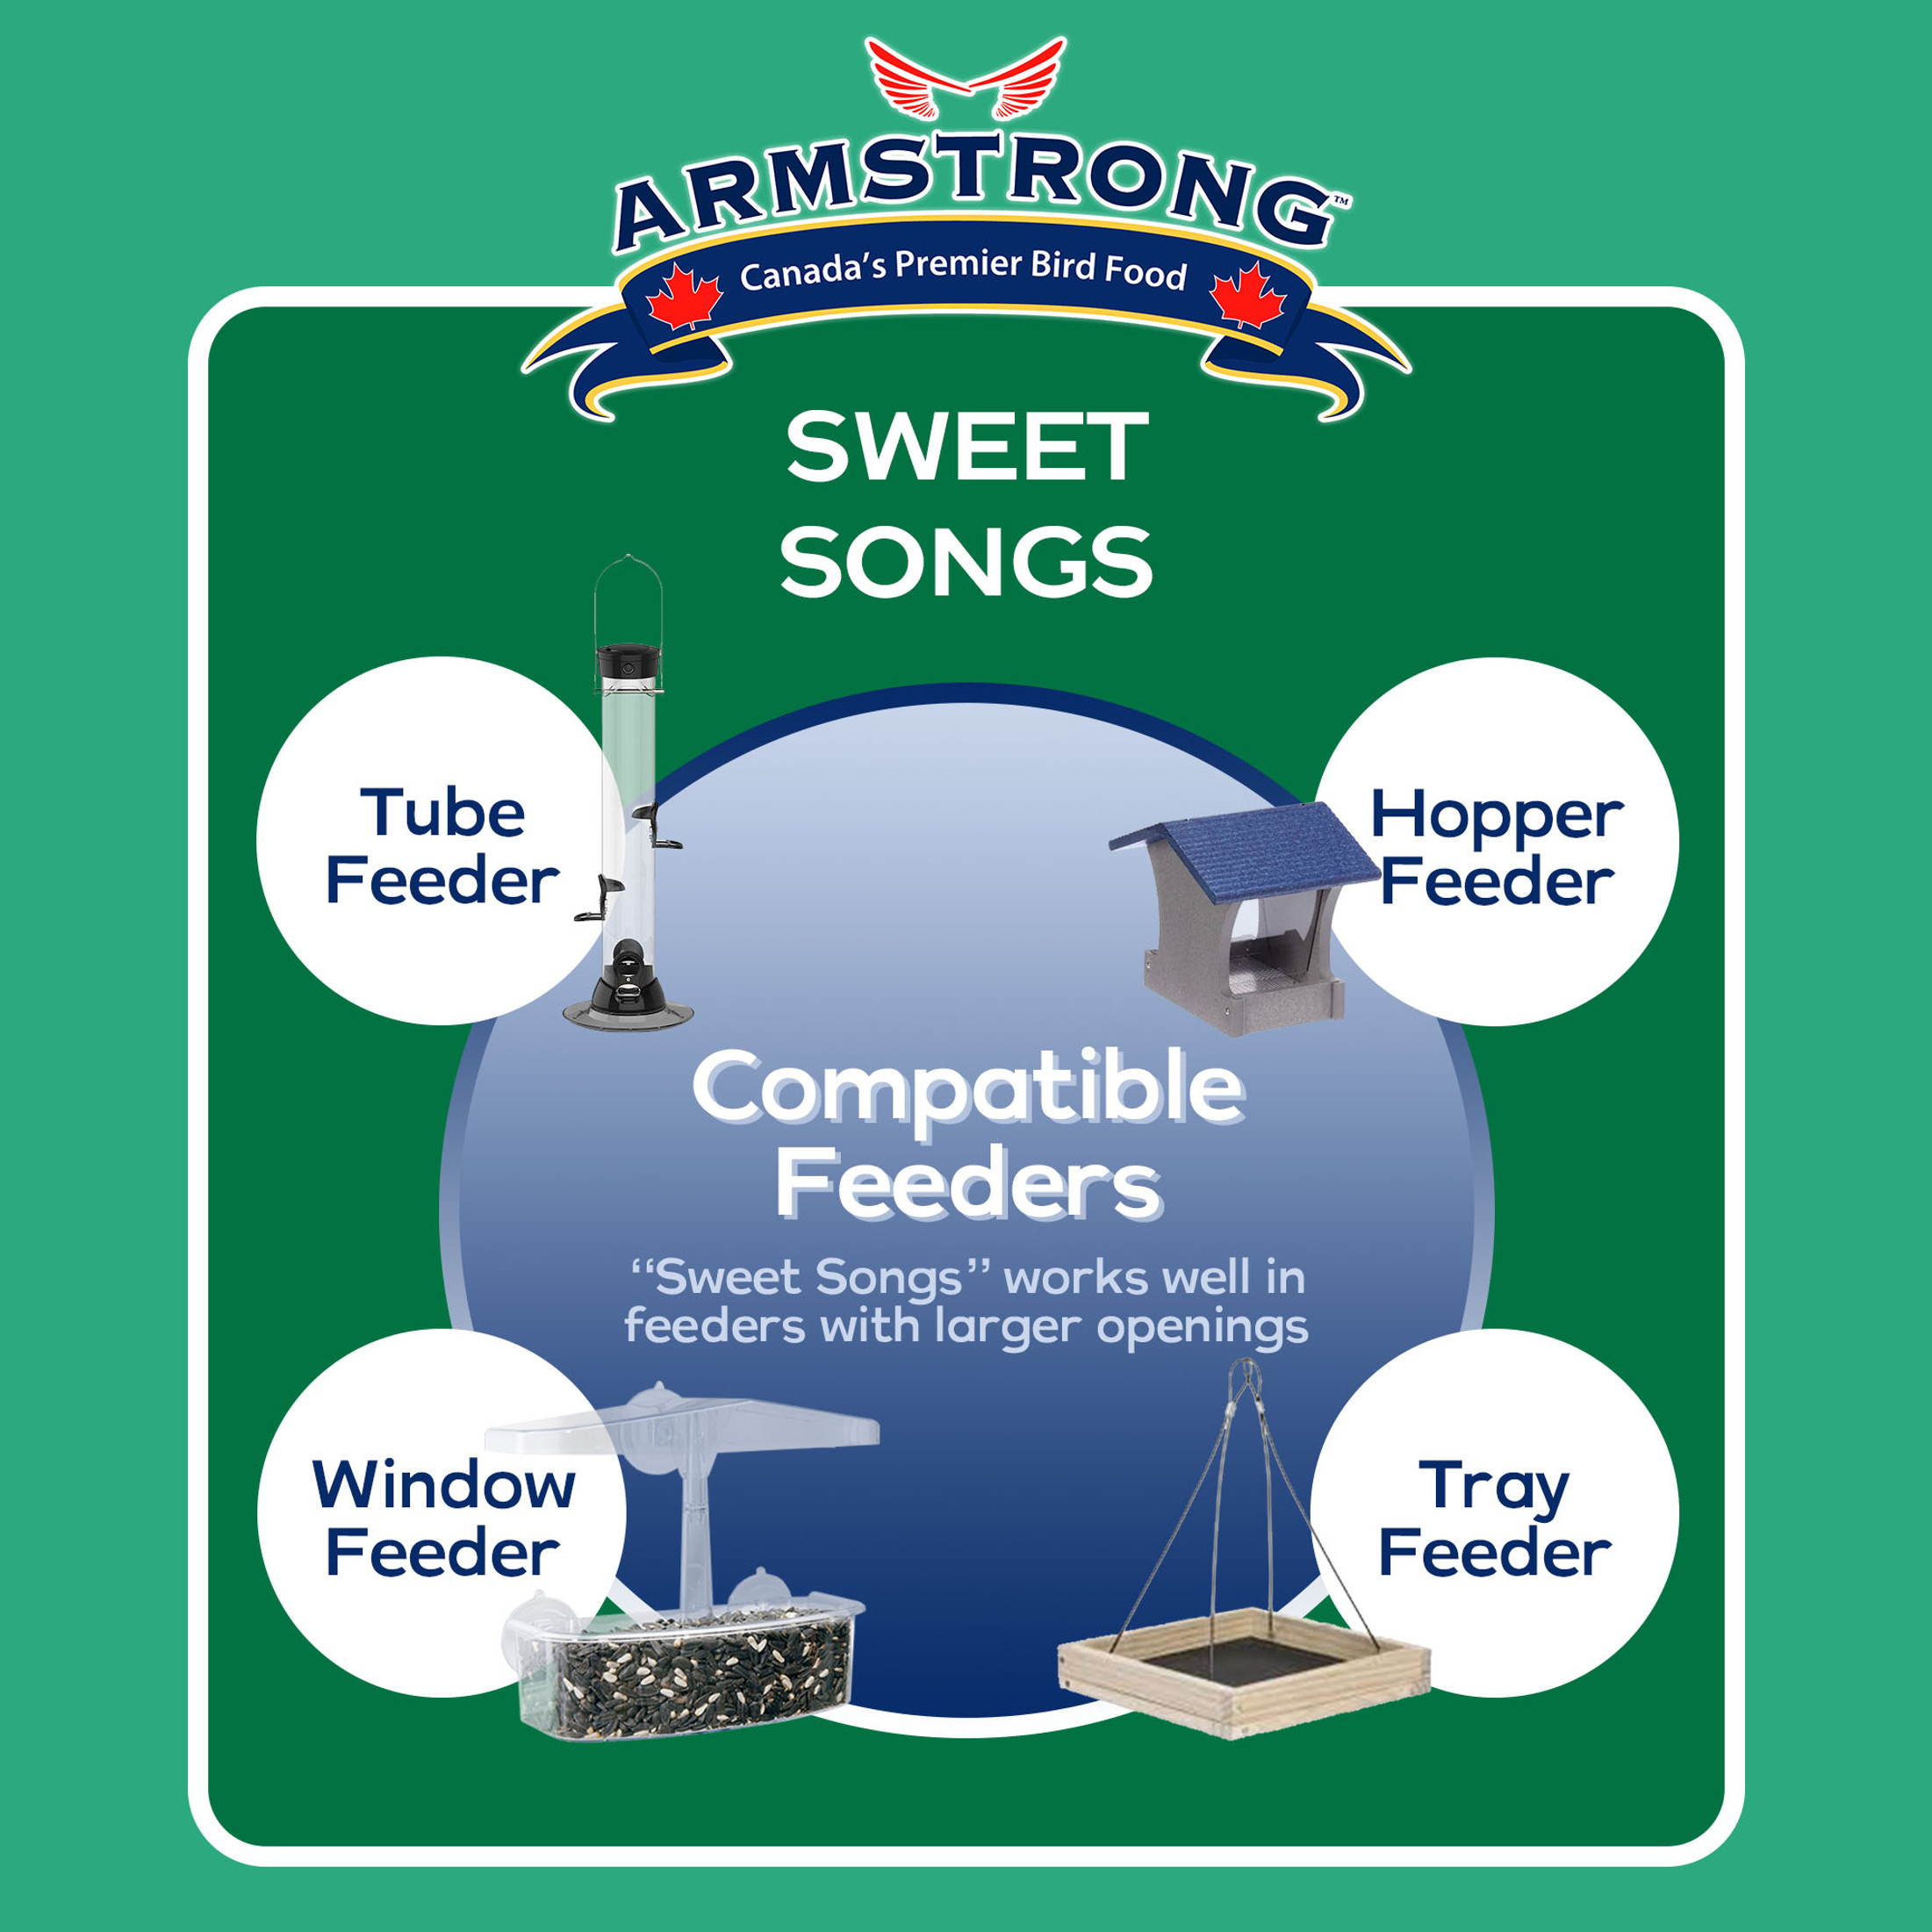 Armstrong Wild Bird Food Royal Jubilee Sweet Songs Bird Seed Blend For Chickadees